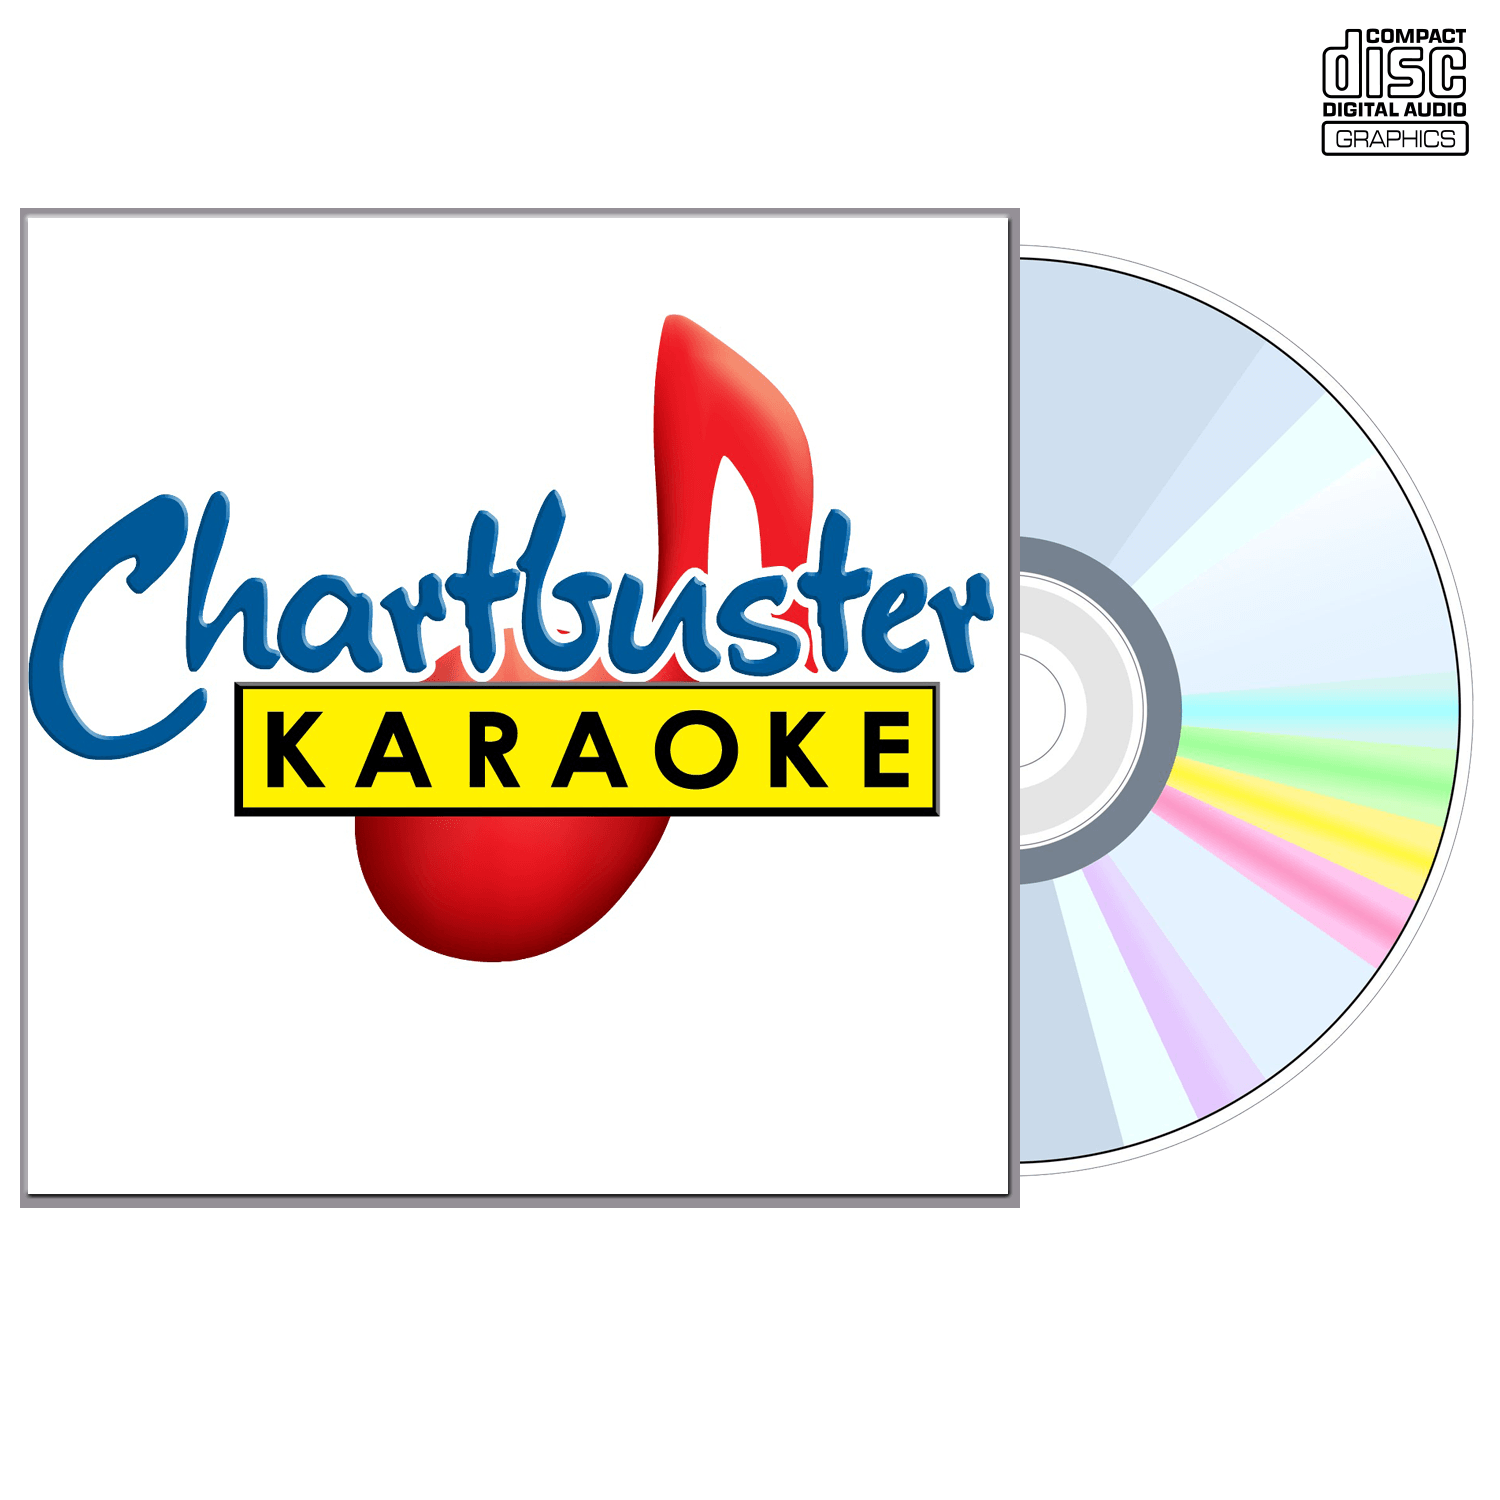 Best Of Rascal Flatts - CD+G - Chartbuster Karaoke - Karaoke Home Entertainment